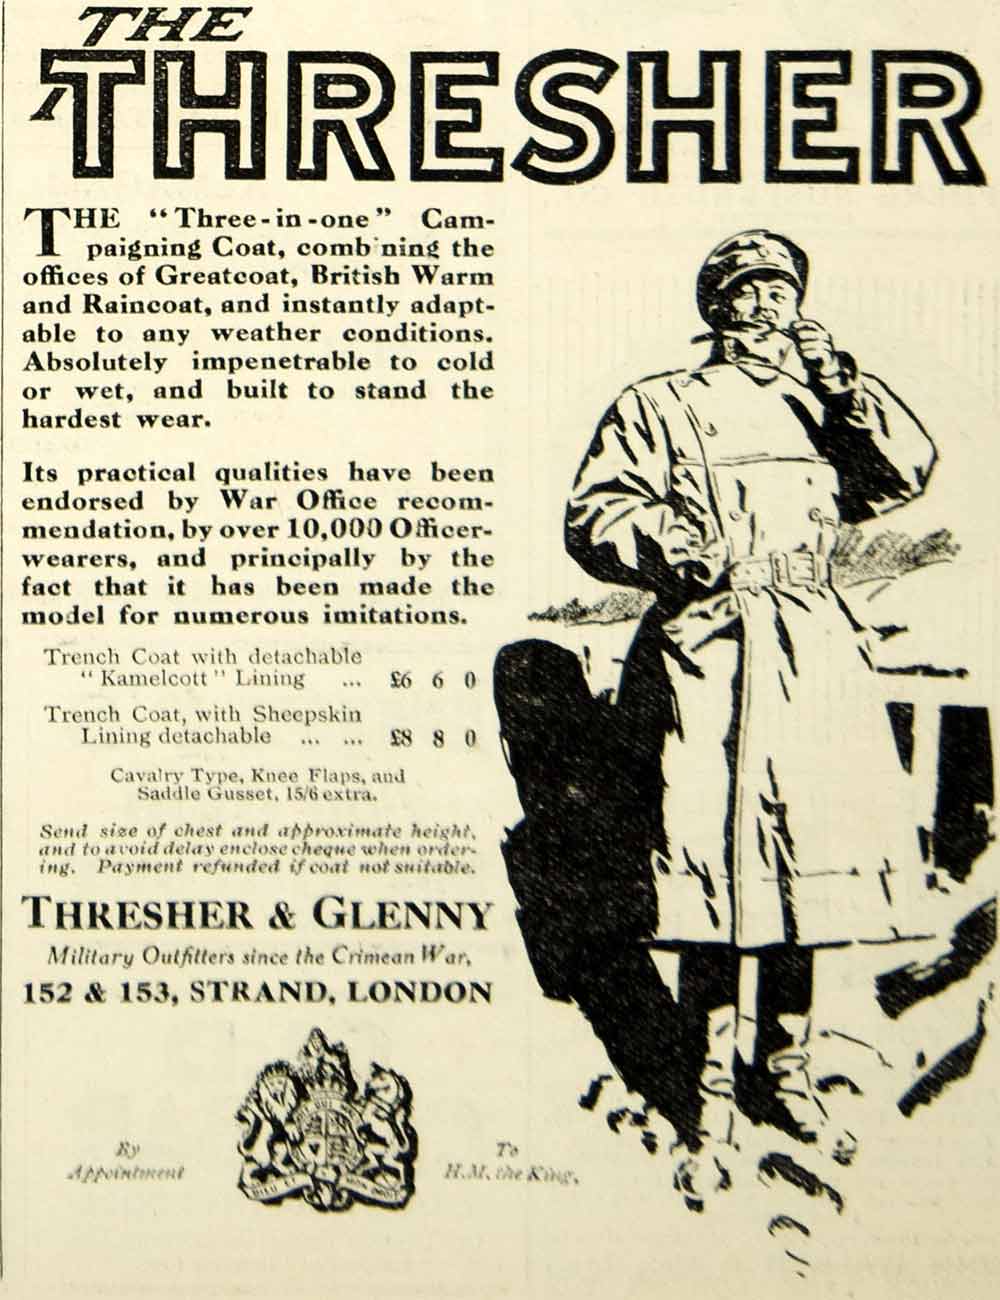 1916 Ad World War I Thresher & Glenny Military Trench Coat Raincoat Greatcoat